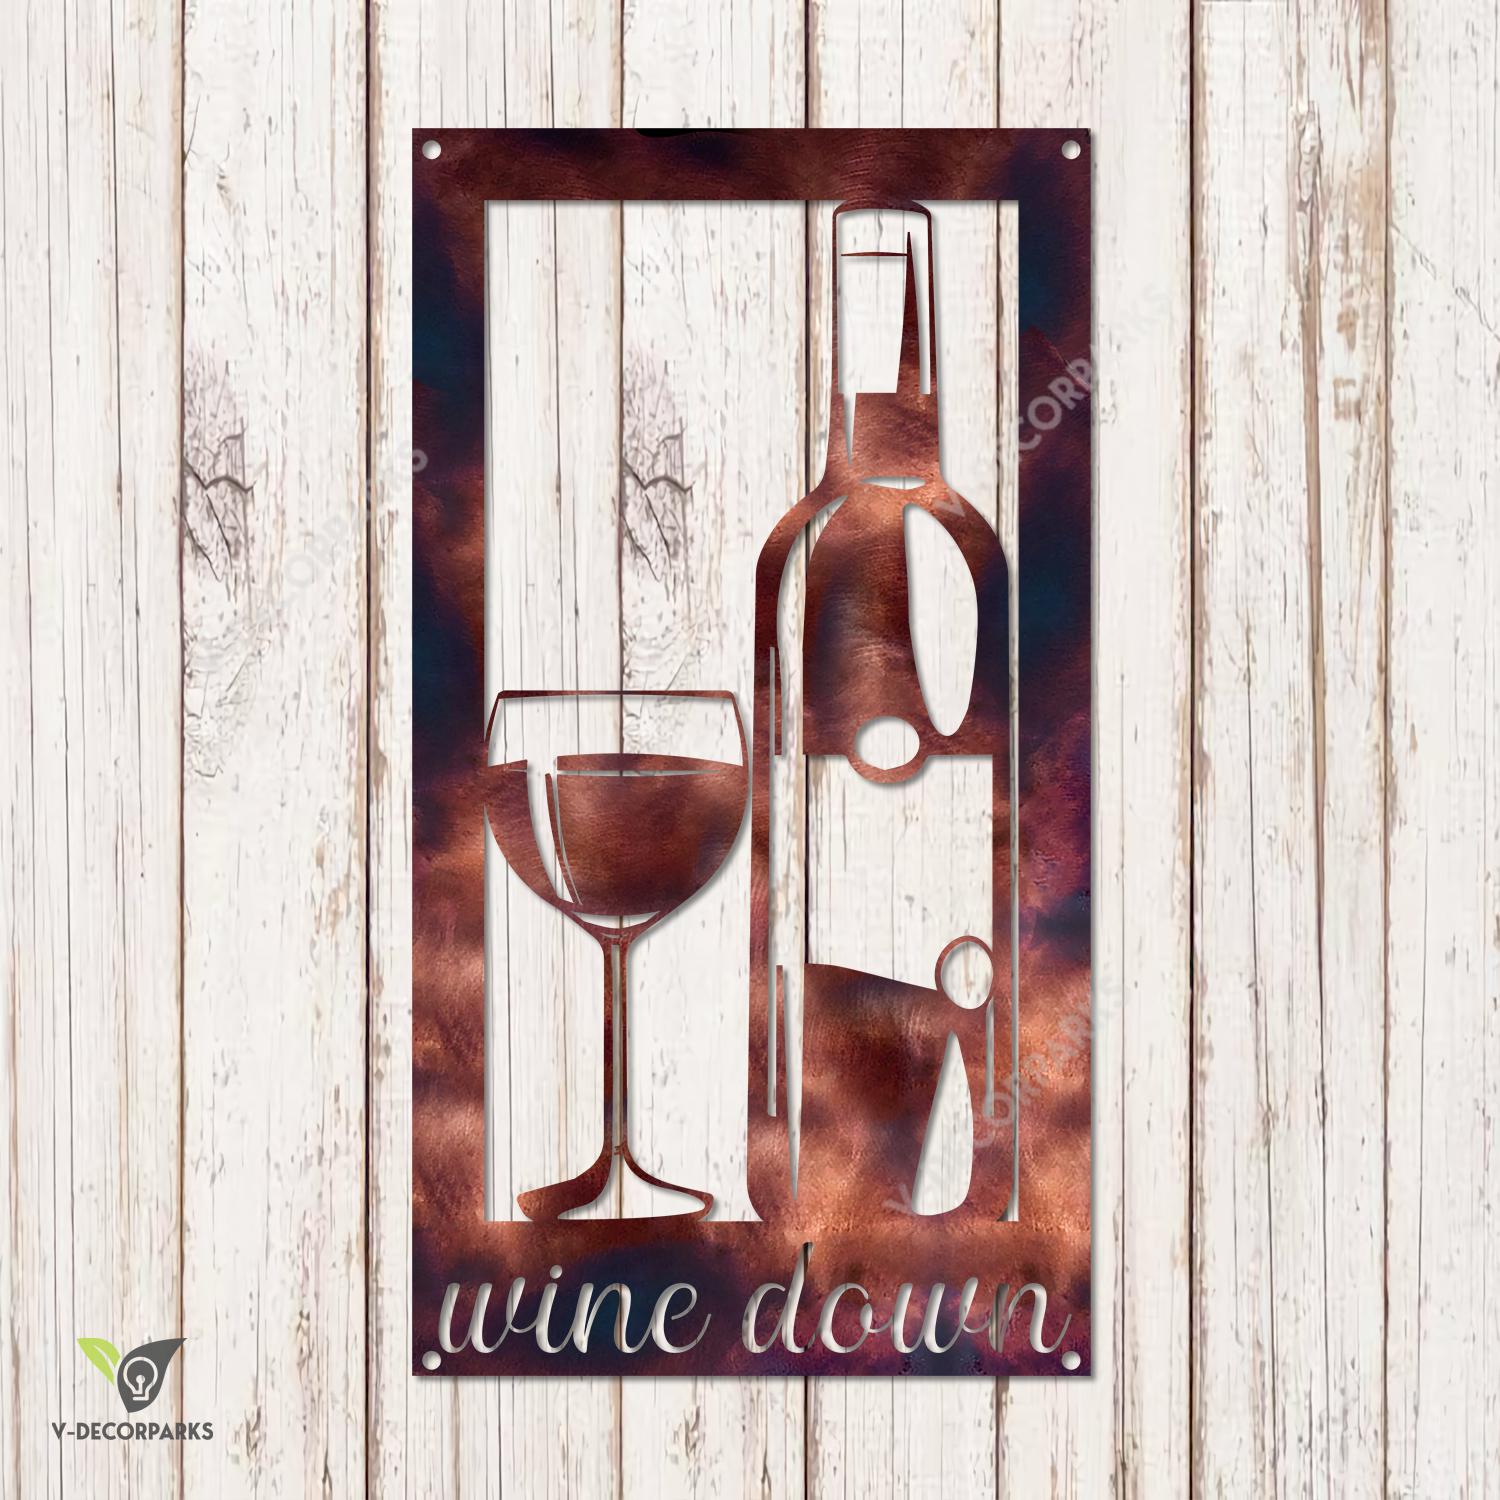 Wine Down Rectangle Copper Metal Sign, Wine Down Interior Accent For Pub